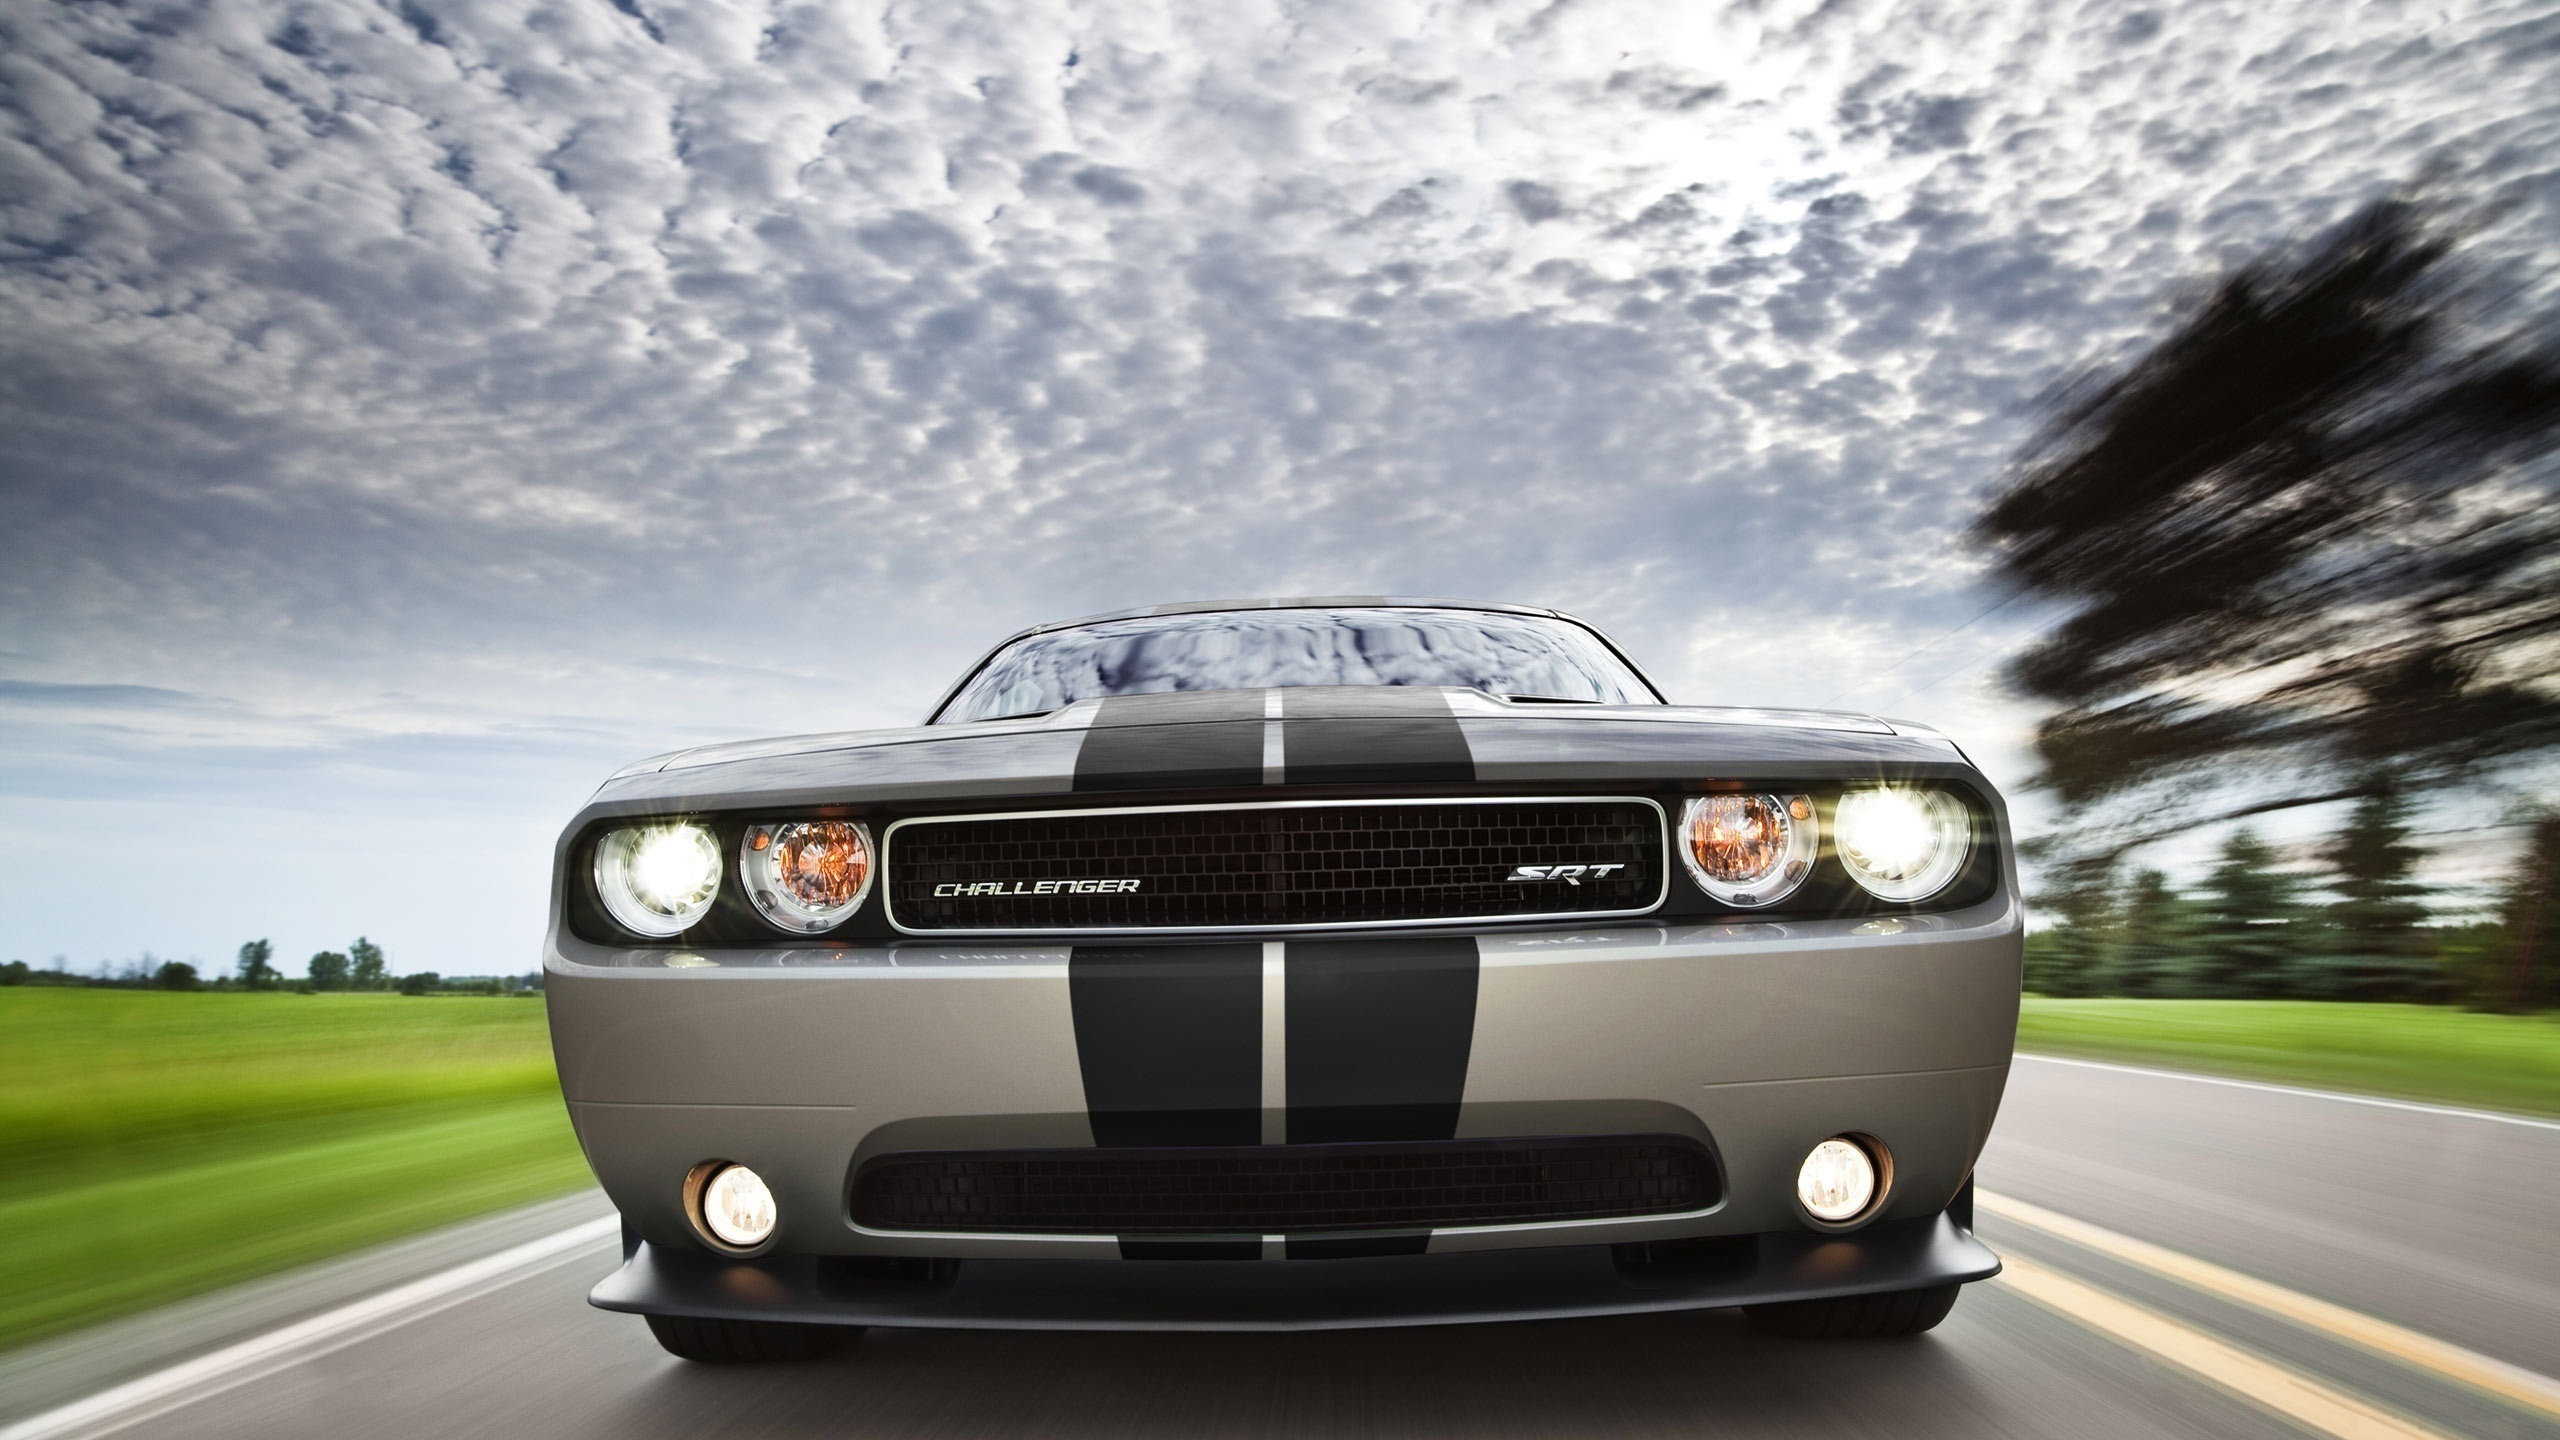 High resolution Dodge Challenger SRT hd 2560x1440 background ID:62689 for desktop